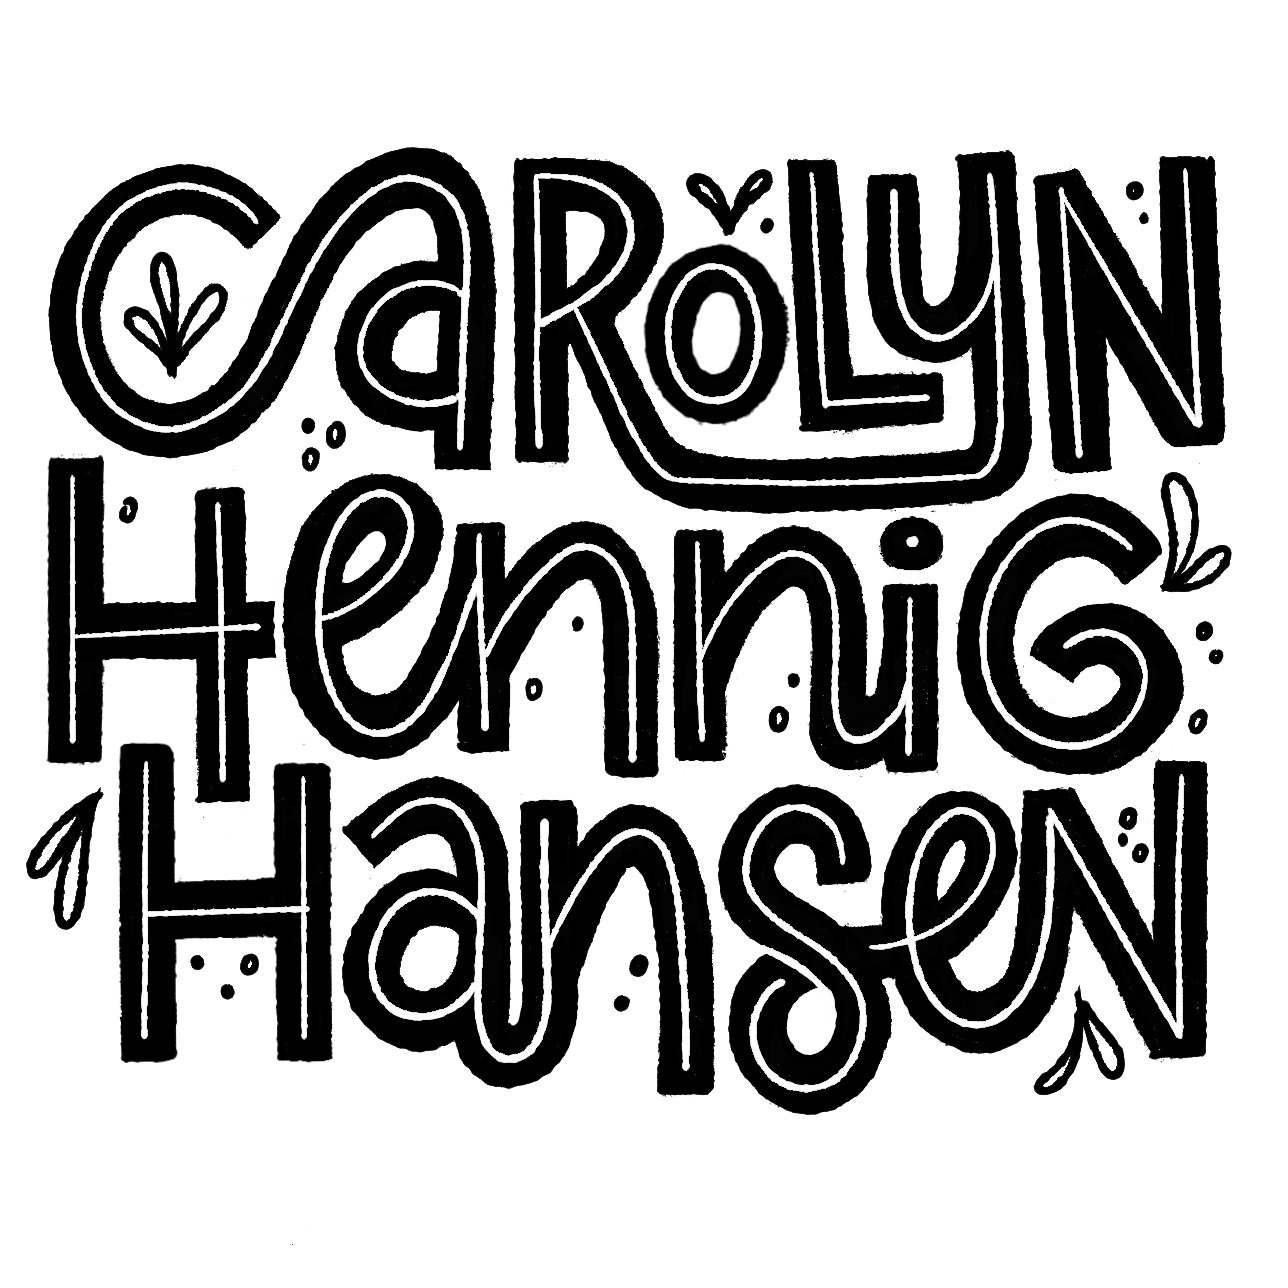 Carolyn Hennig Hansen